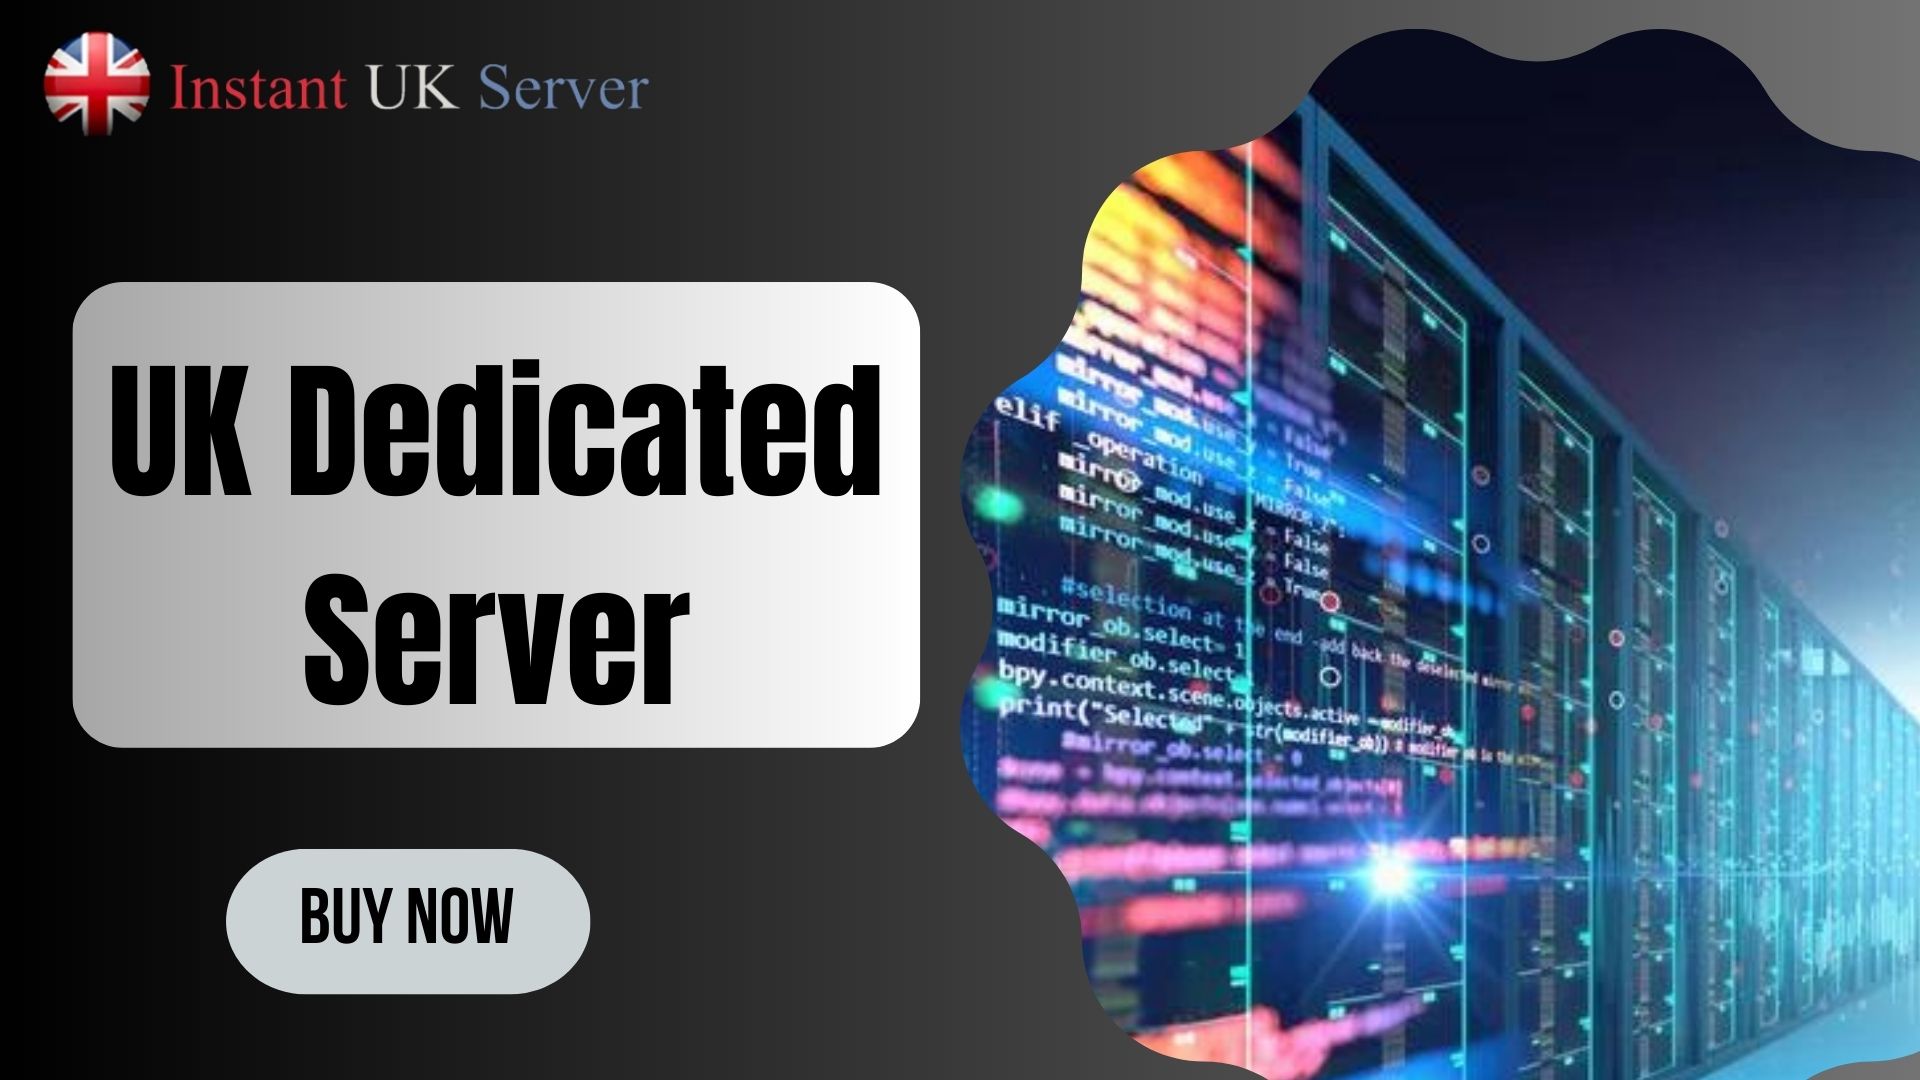 UK Dedicated Server